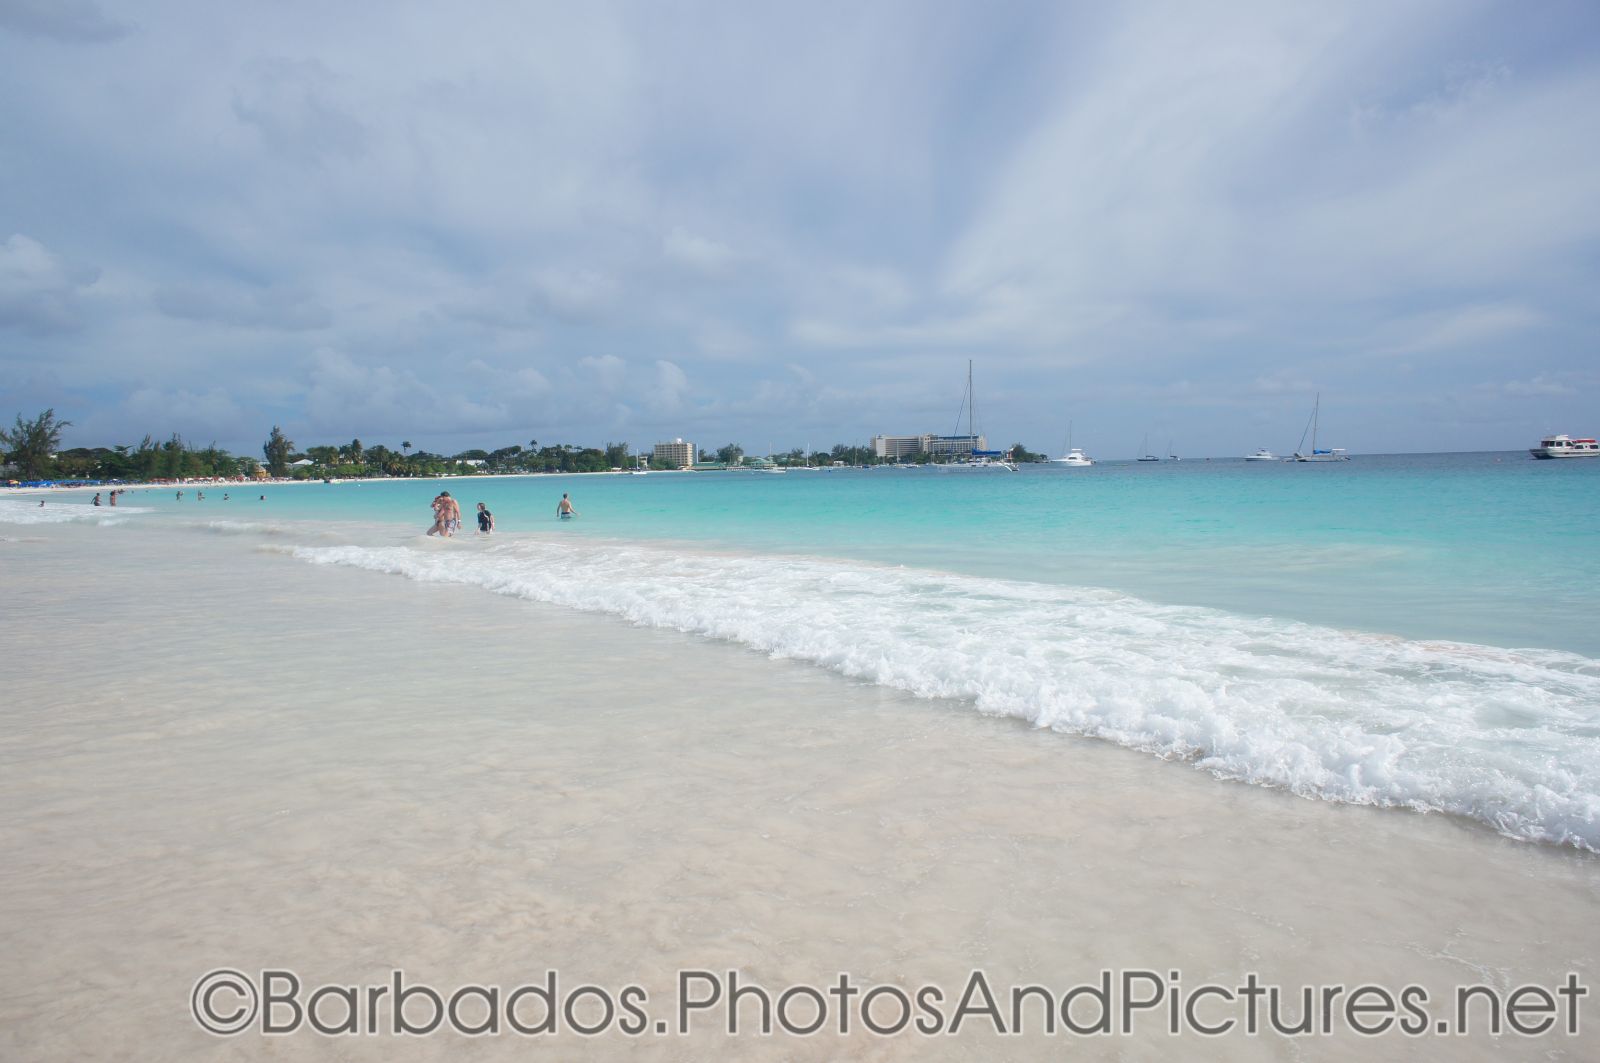 Wave meets white sand at Carlisle Bay Beach in Bridgetown Barbados.jpg
